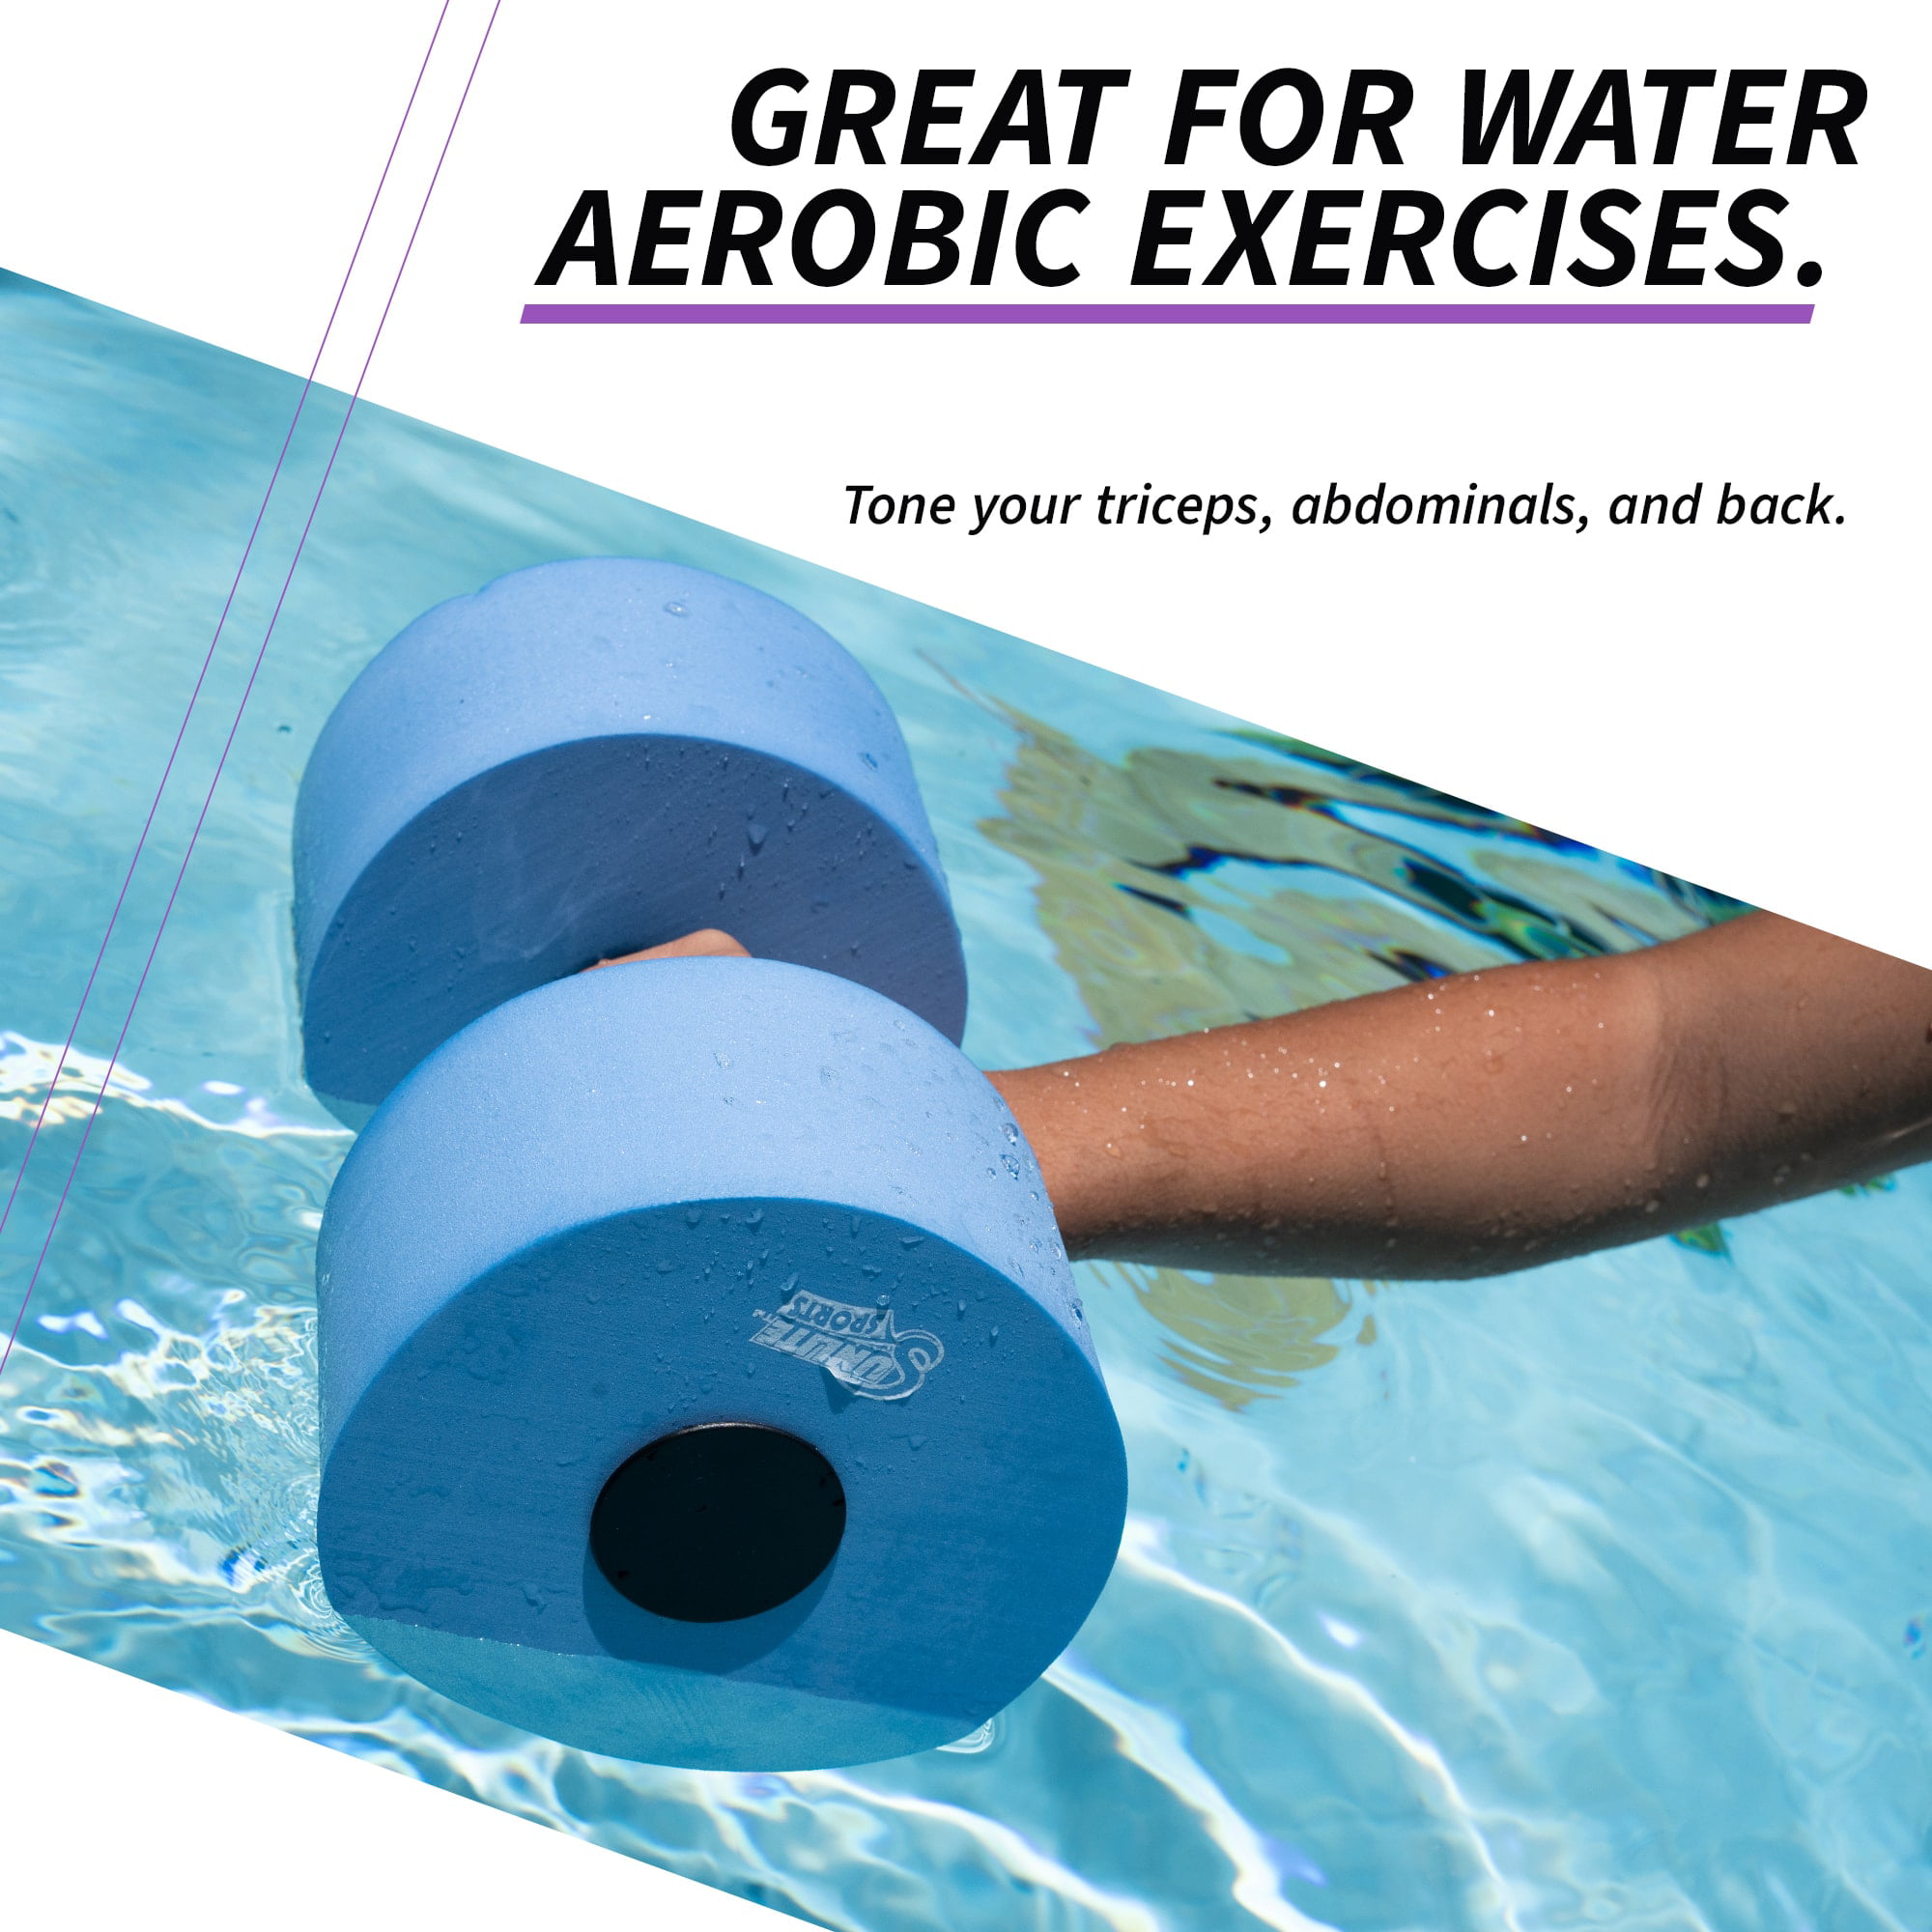  Sunlite Sports Aqua Fitness Deluxe Flotation